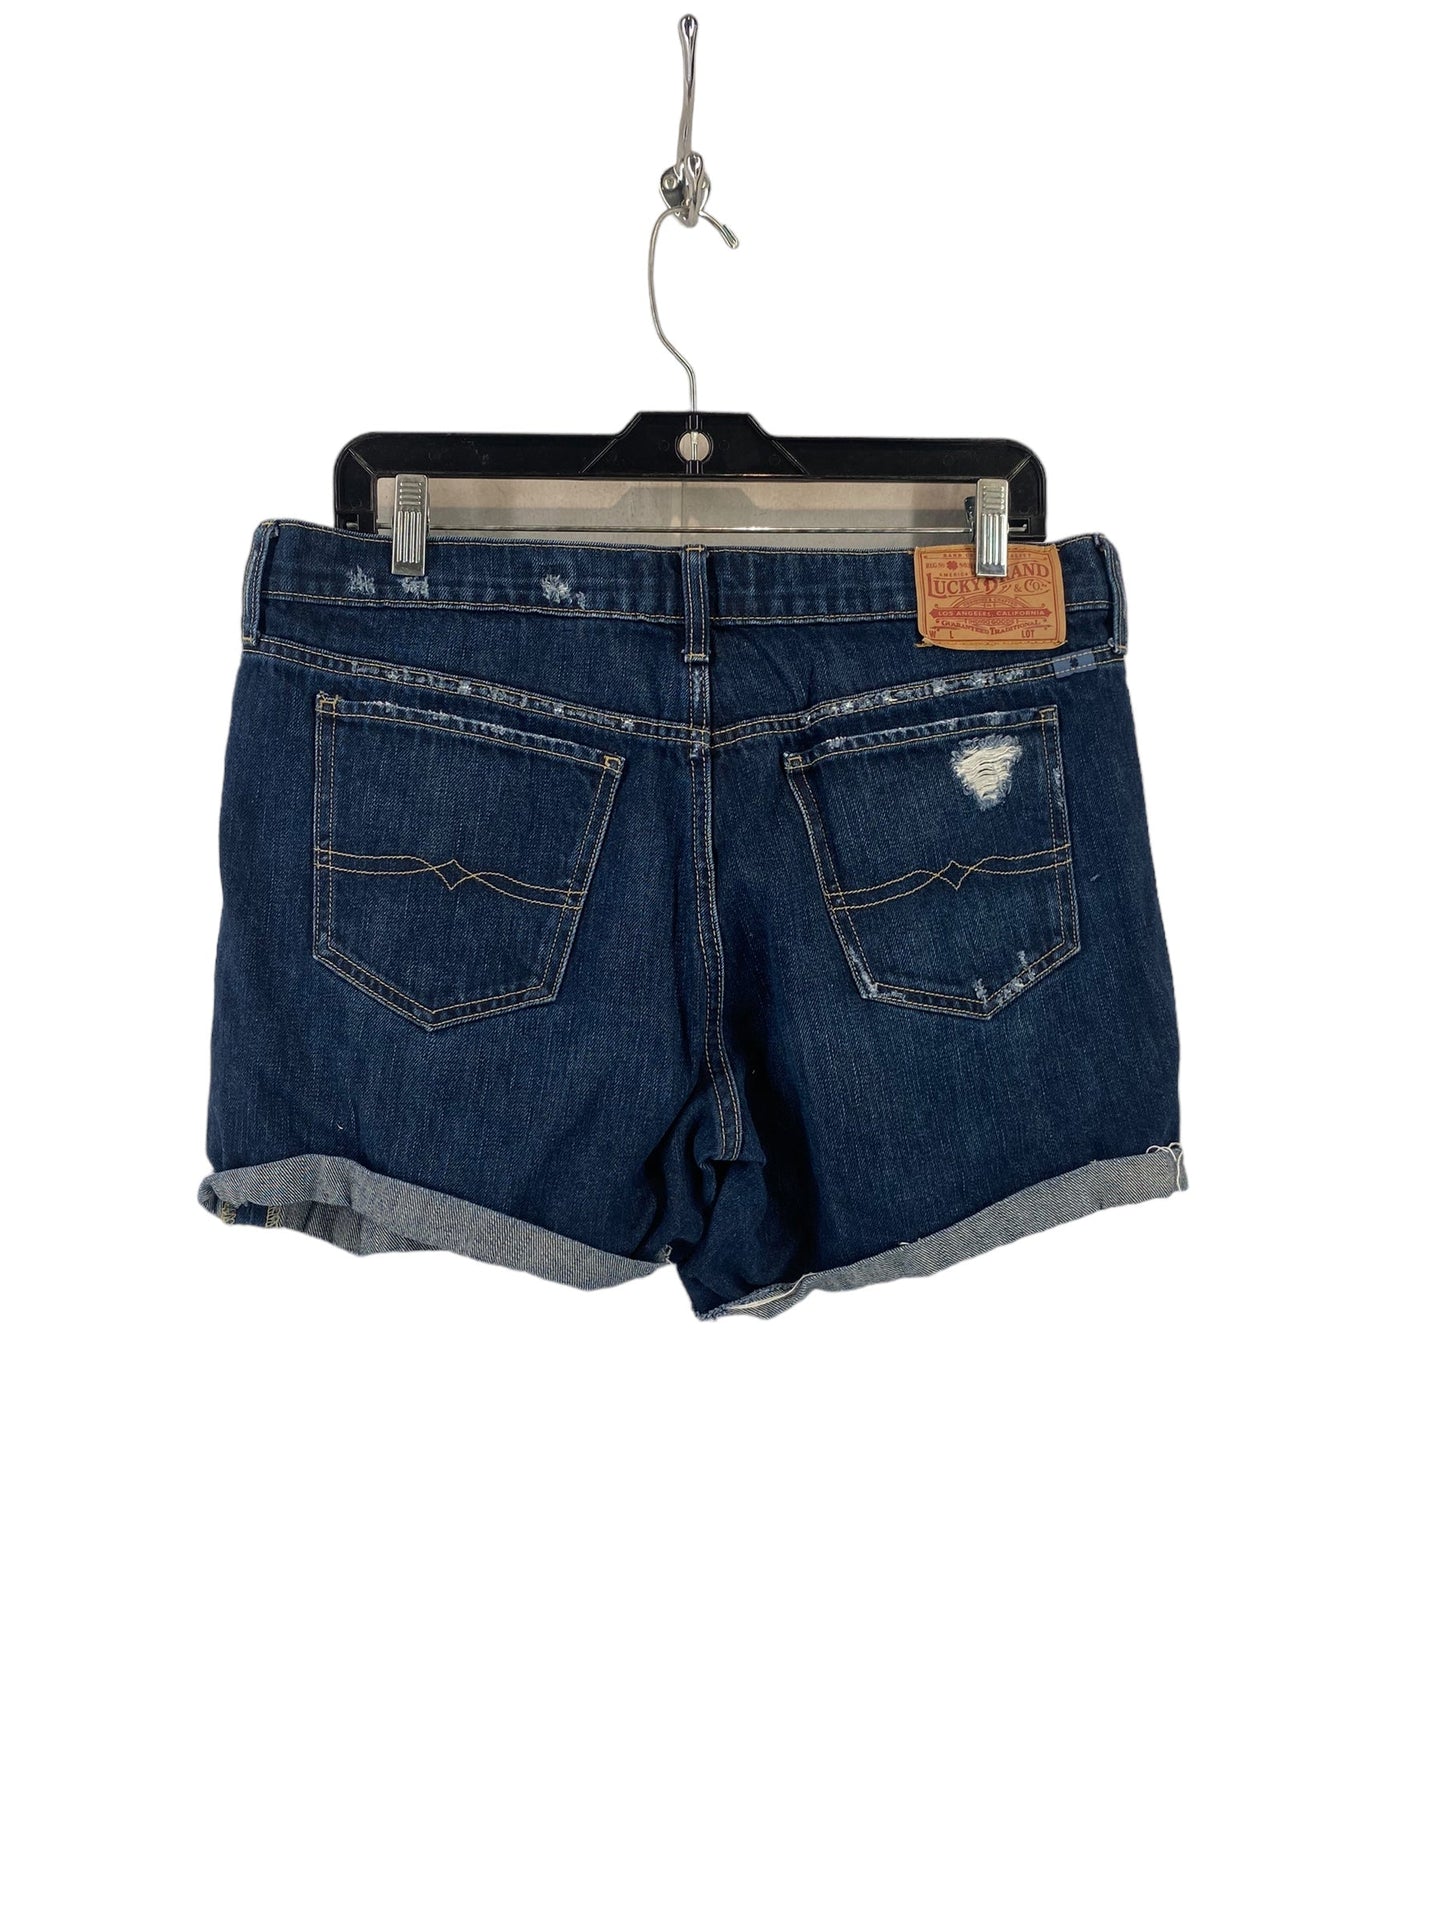 Blue Denim Shorts Lucky Brand, Size 8